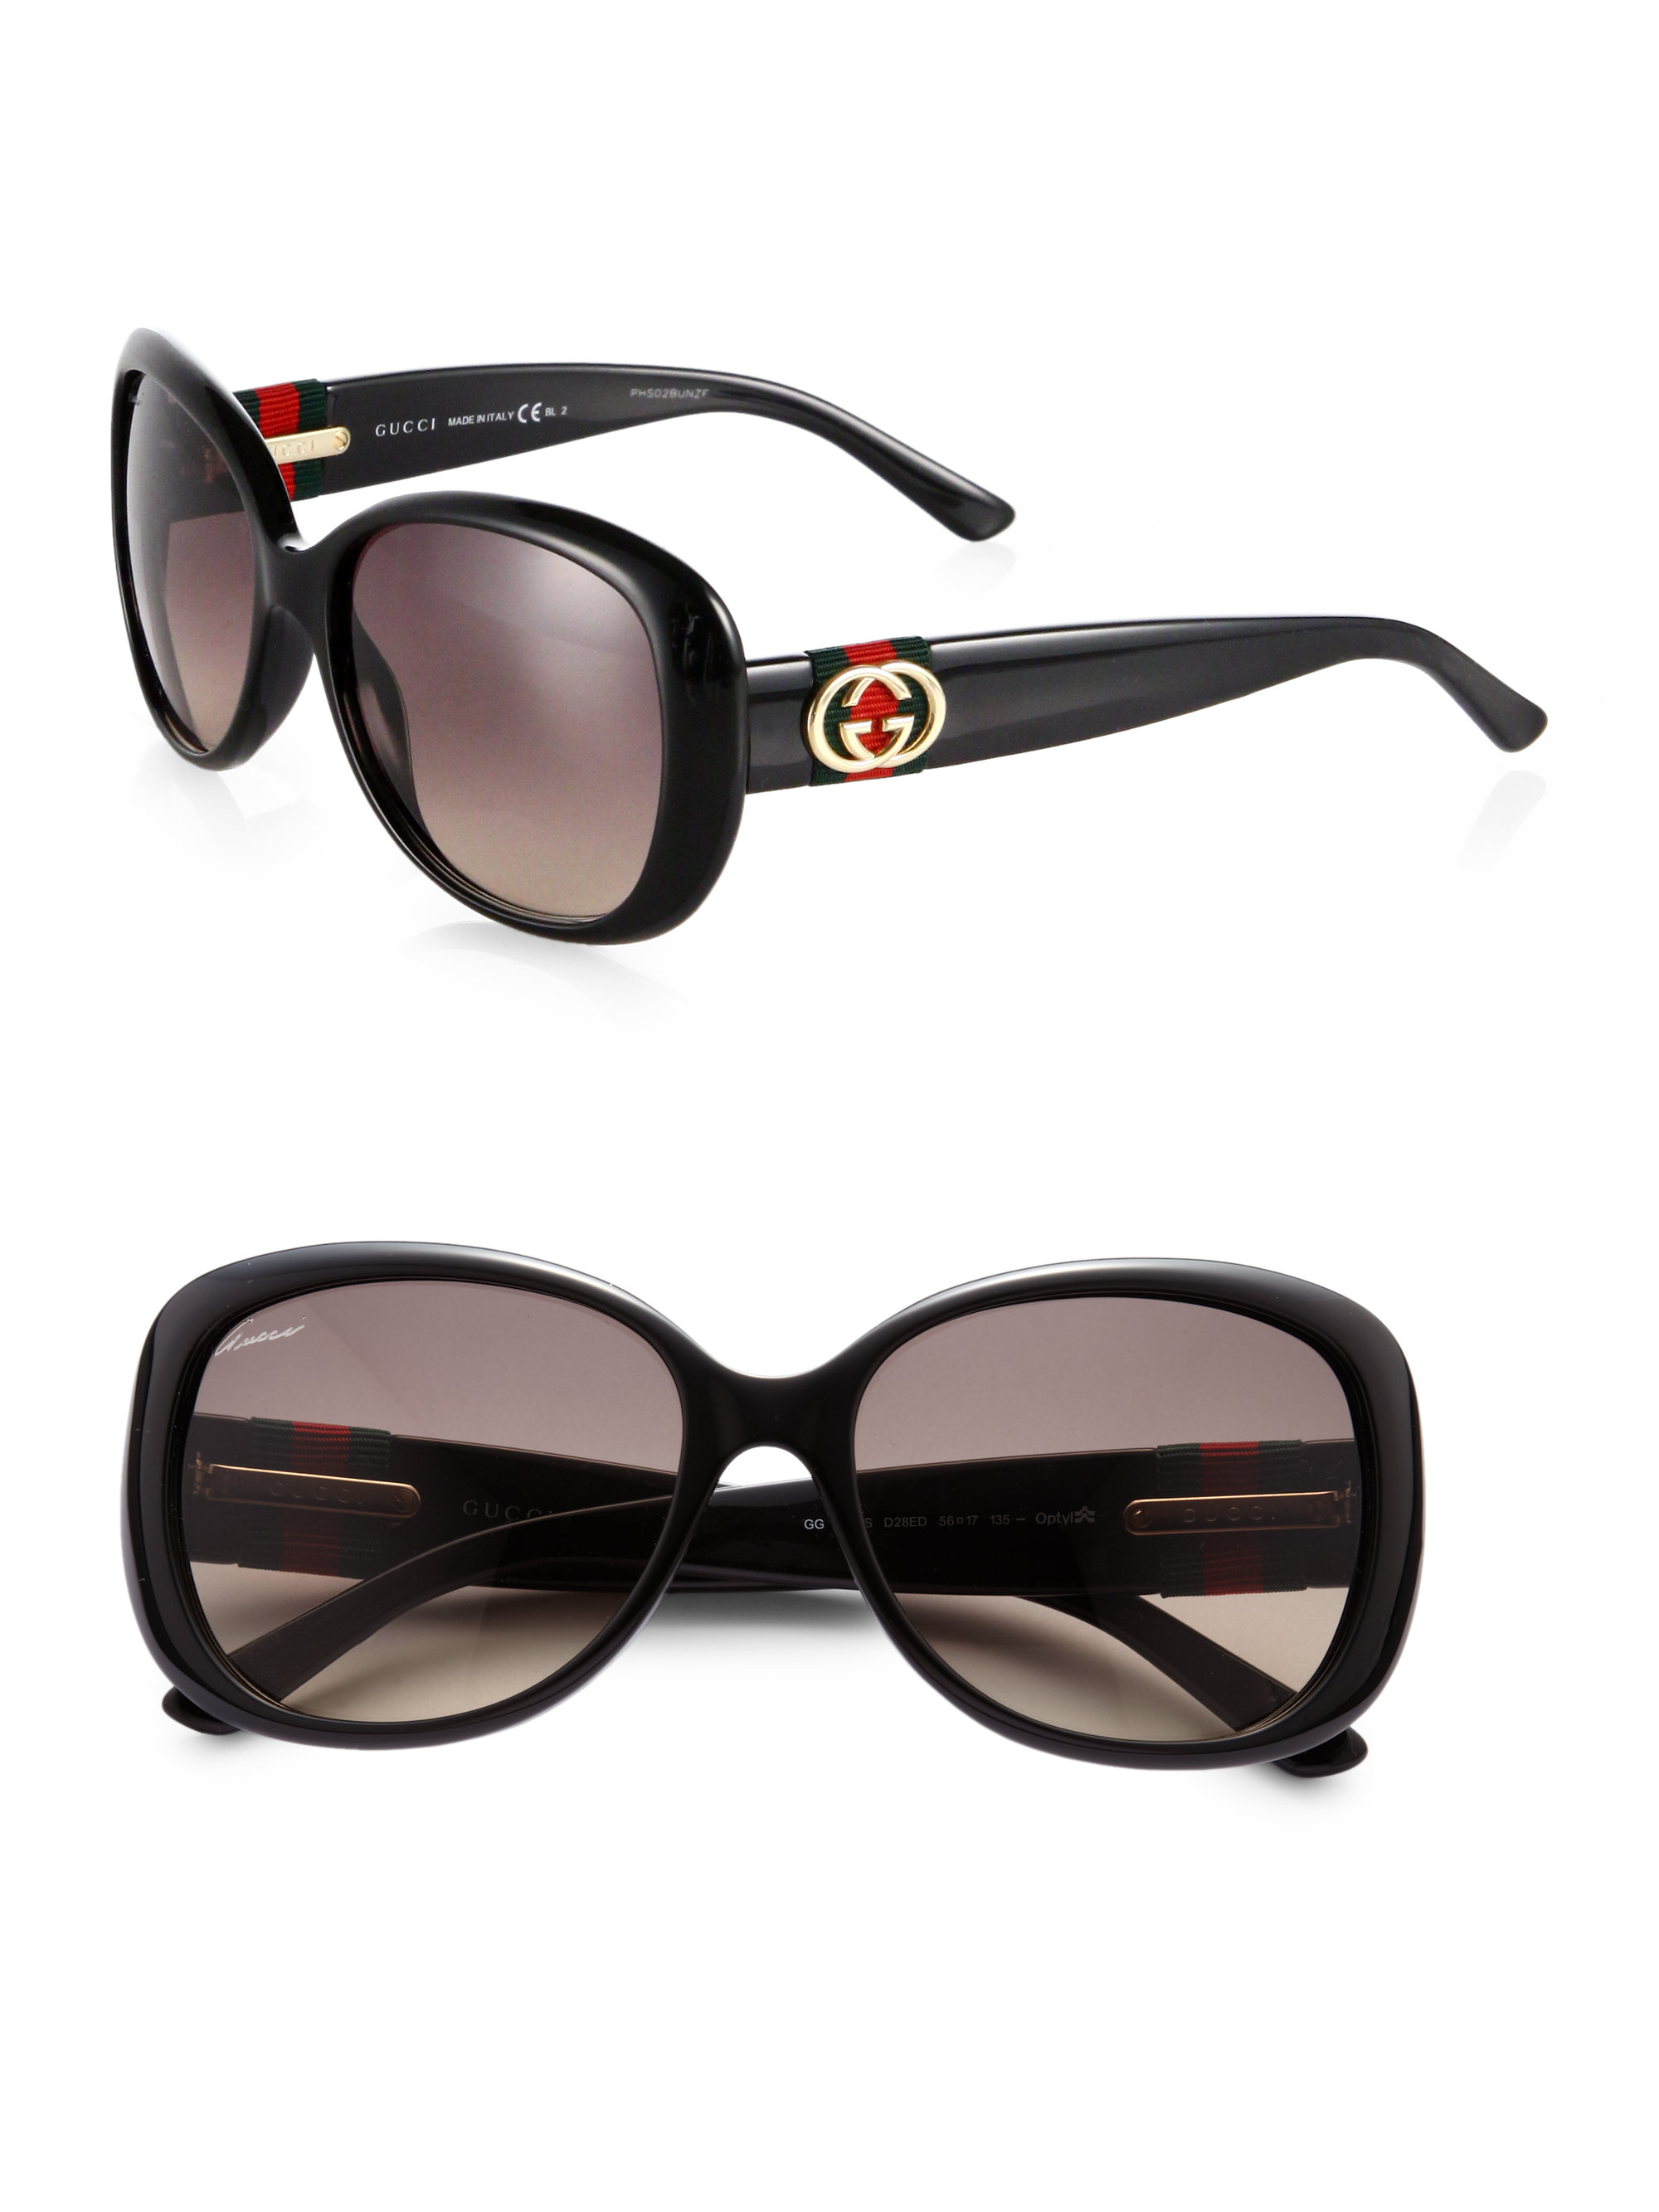 Lyst - Gucci Classic Logo Round Plastic Sunglasses in Black